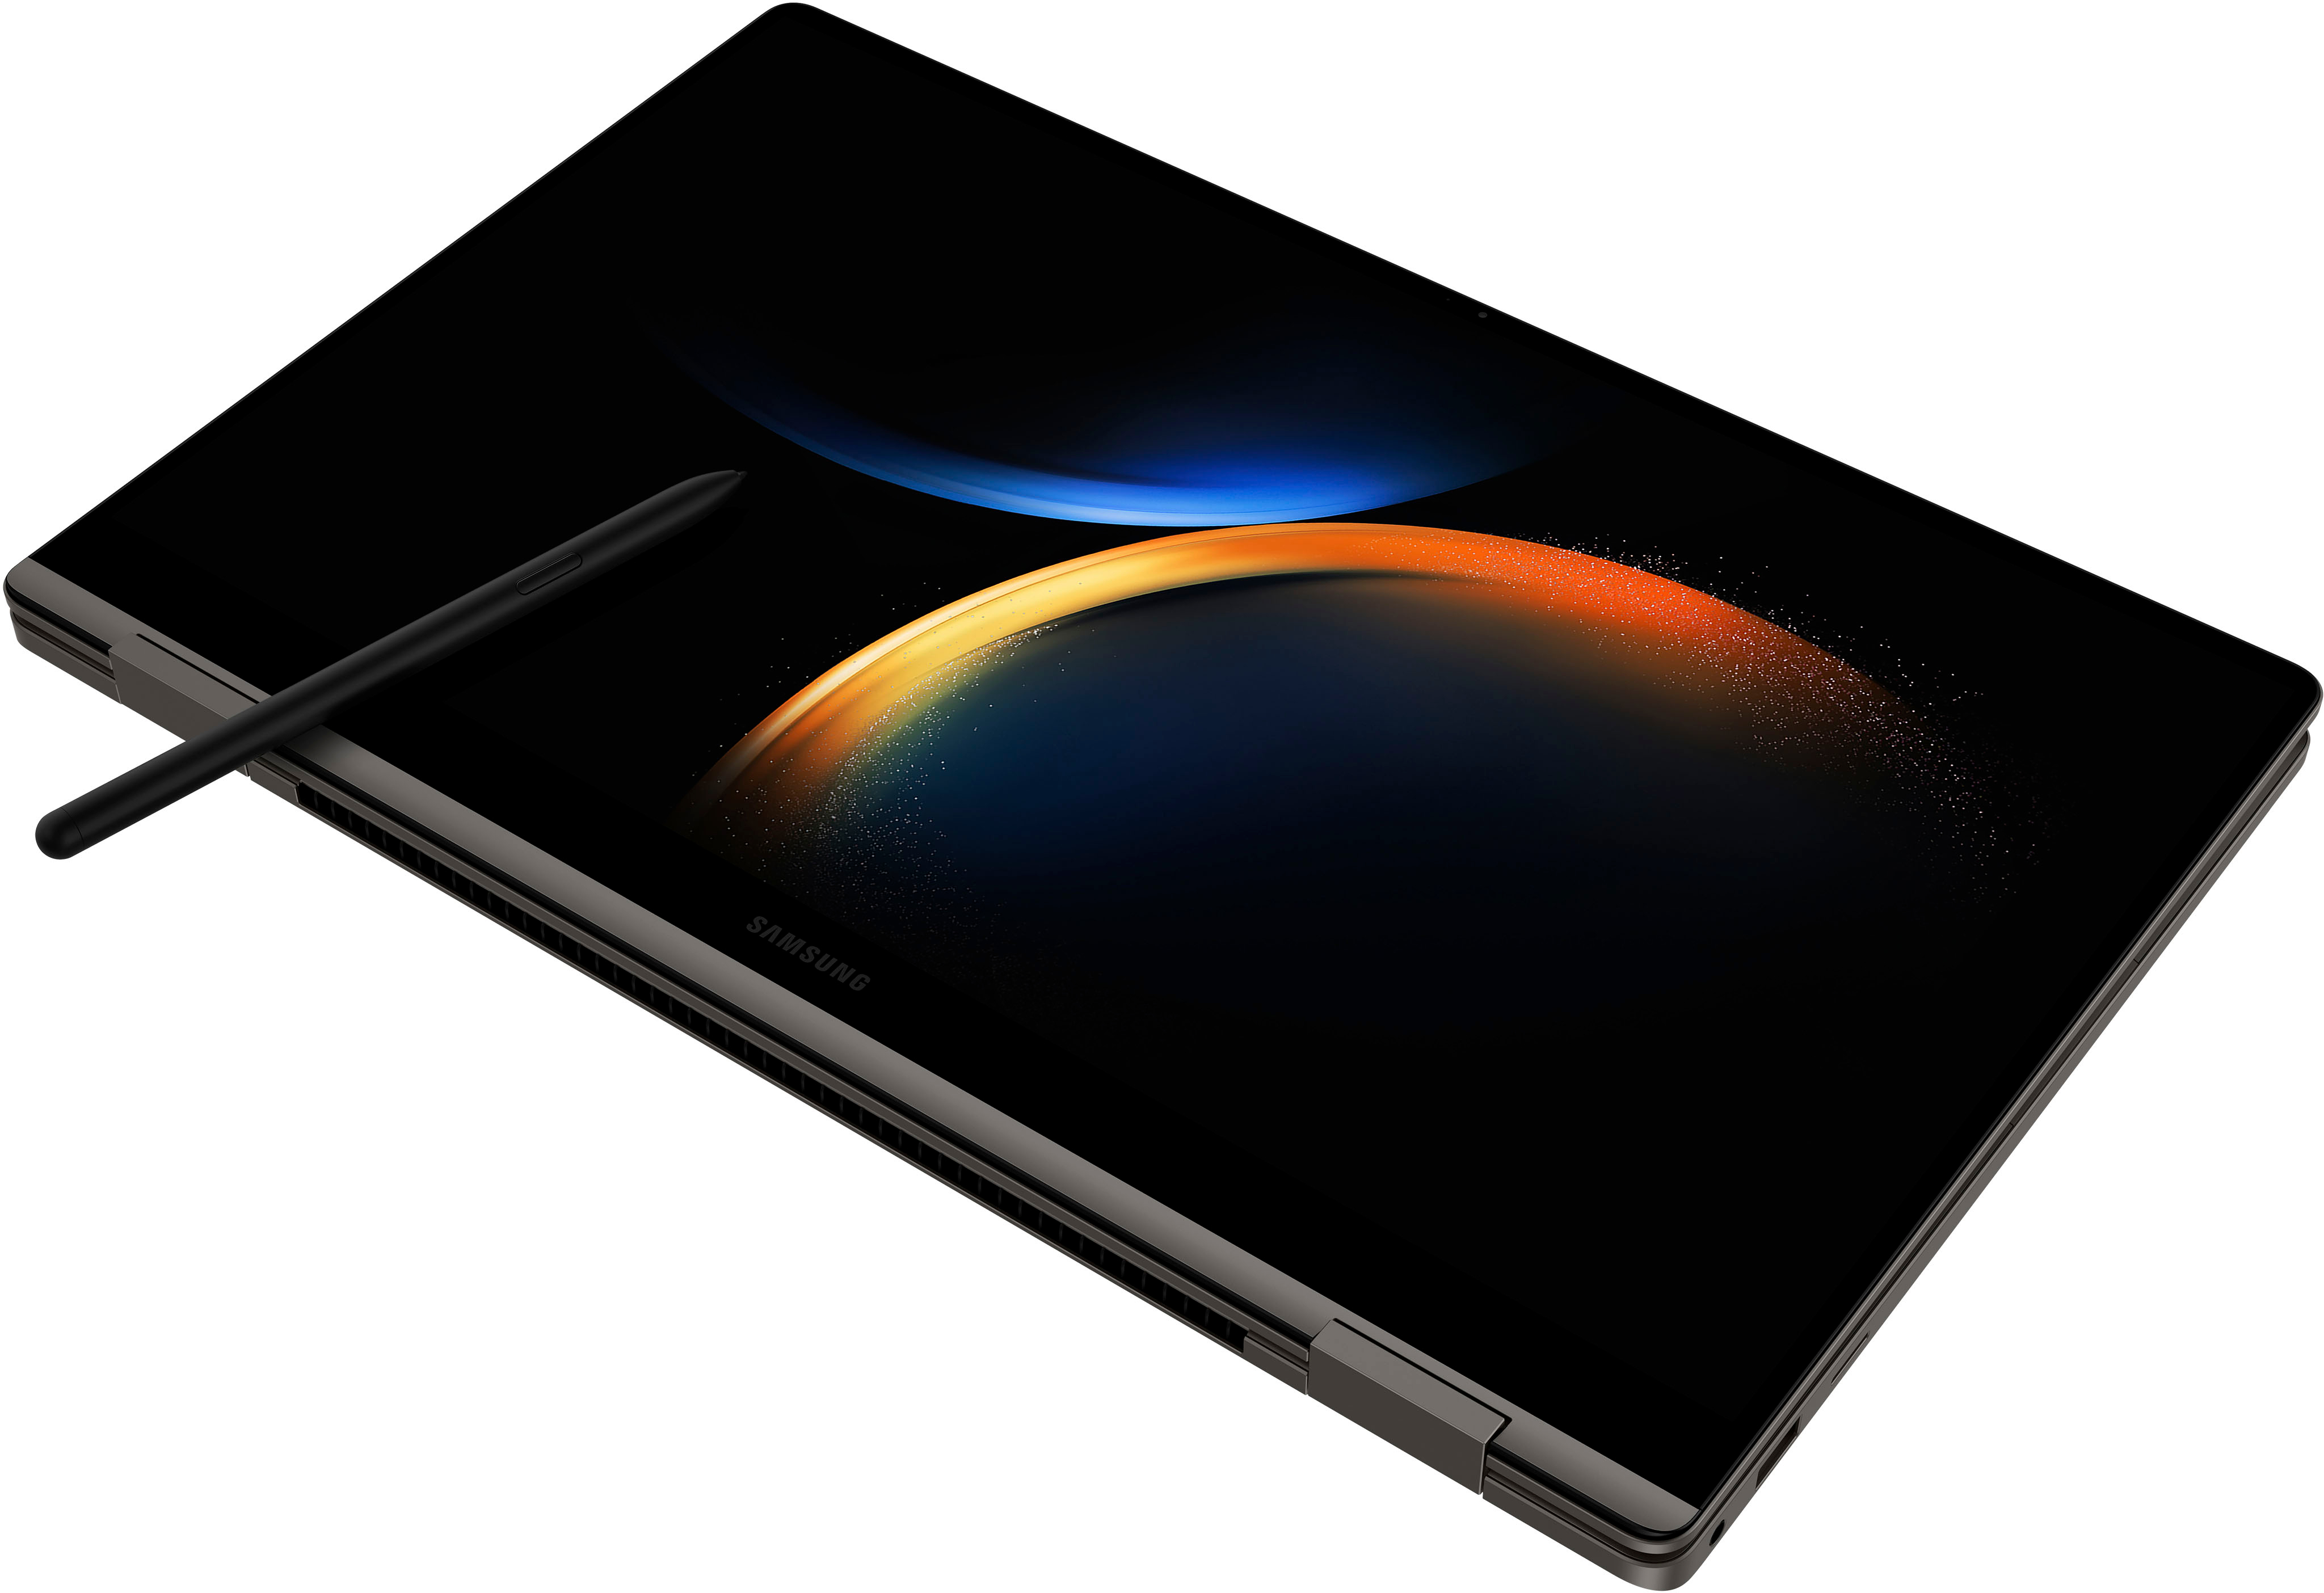 Notebook Samsung Book 360 Prata 13 Core i5 8GB NP730QEDKF3BR - Ibyte